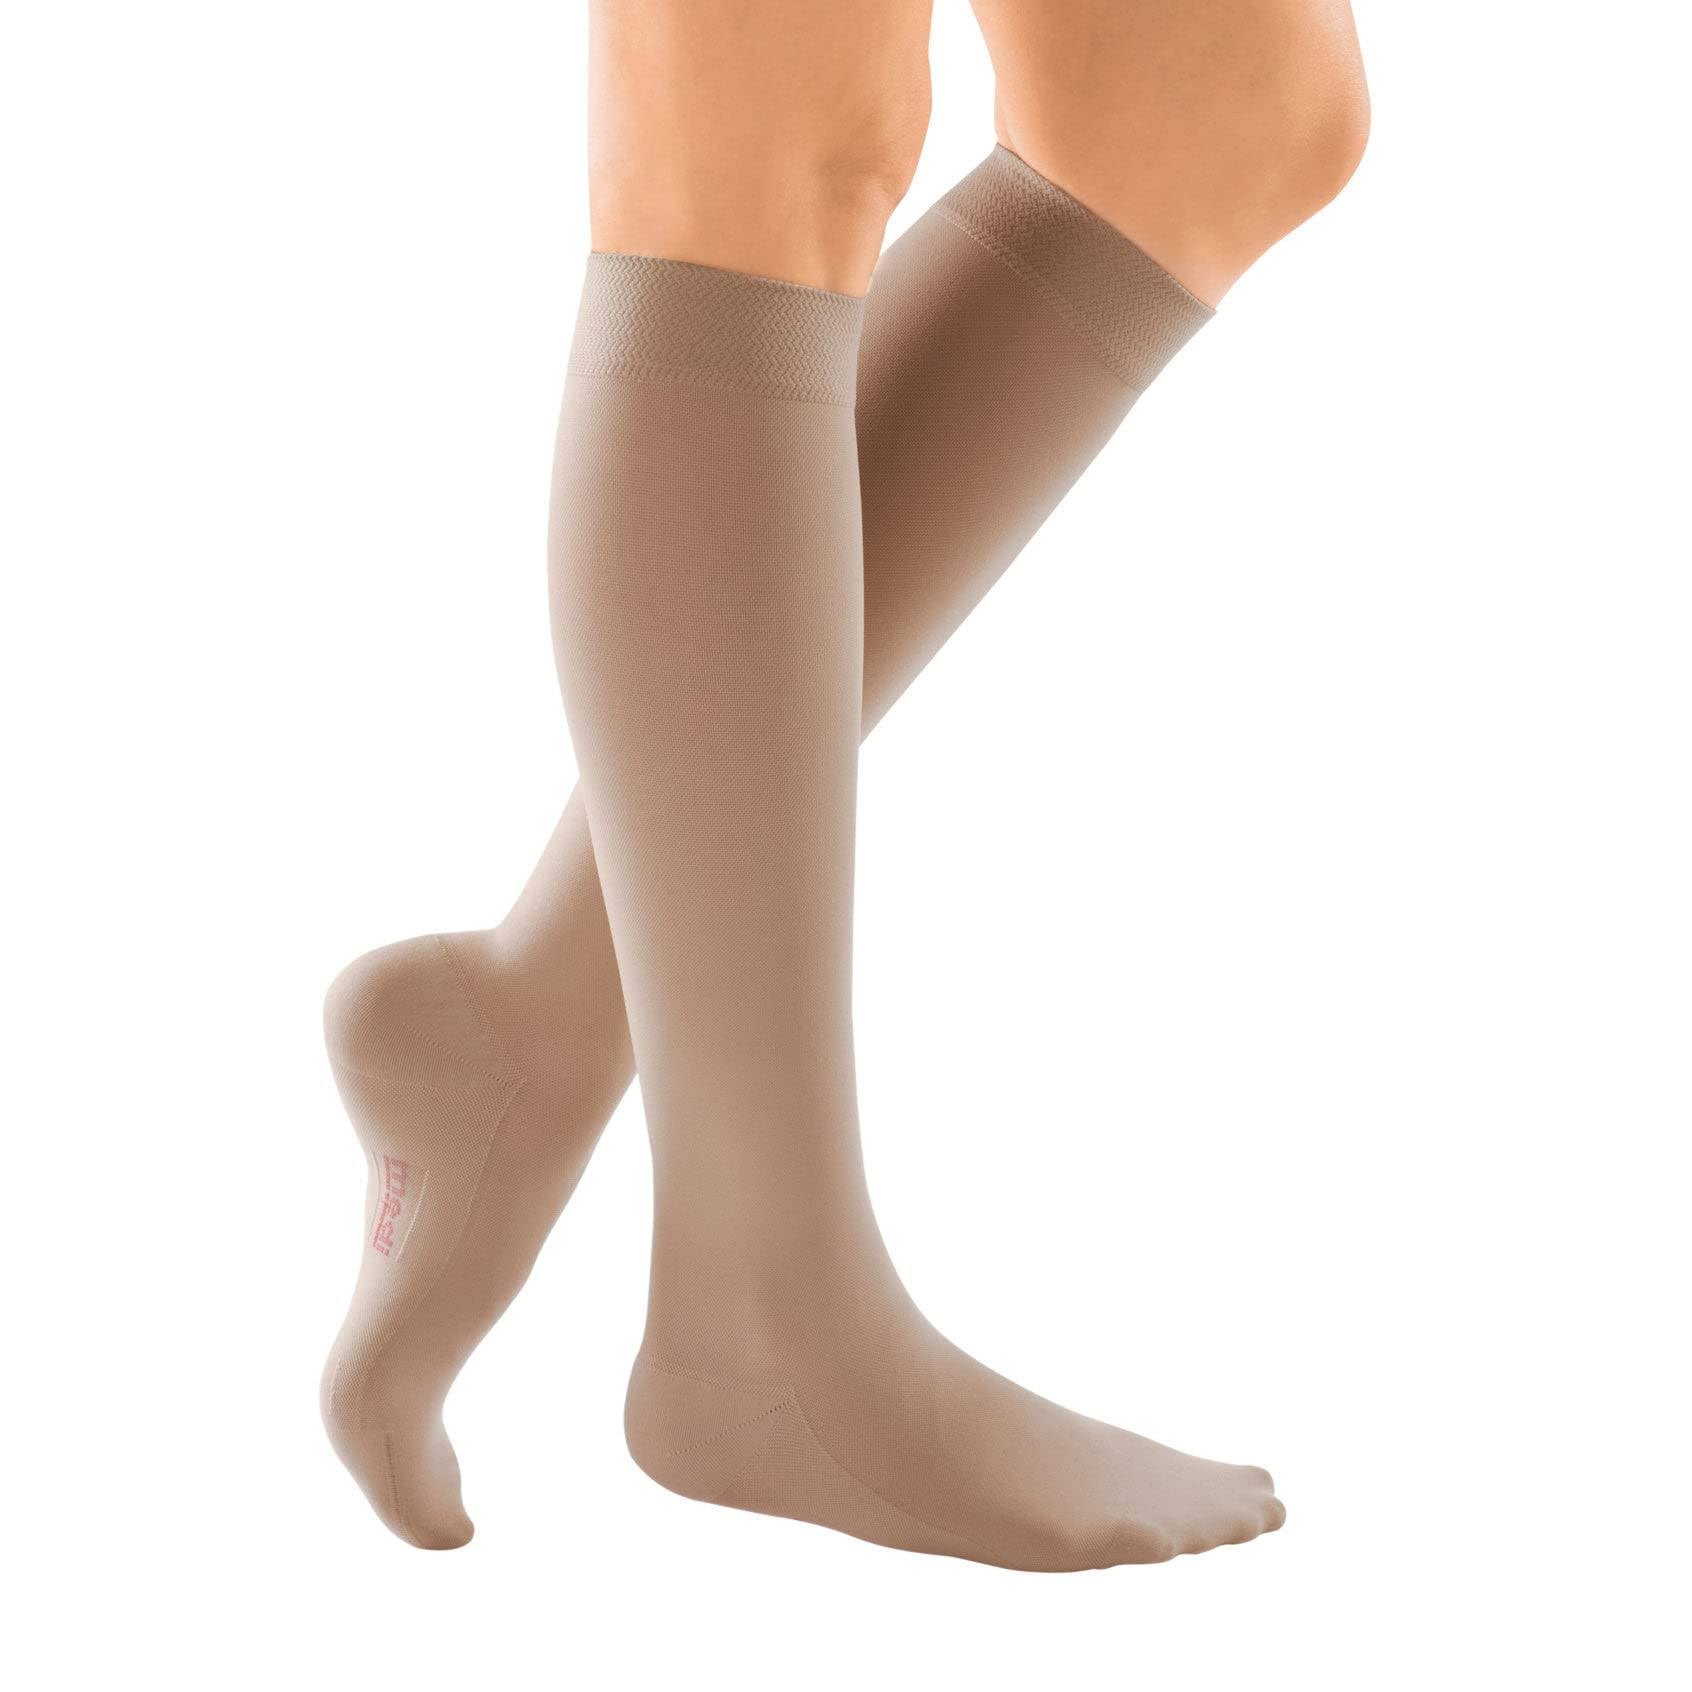 Mediven Sheer and Soft Calf Length Stockings - Natural, III, 15-20mmHg